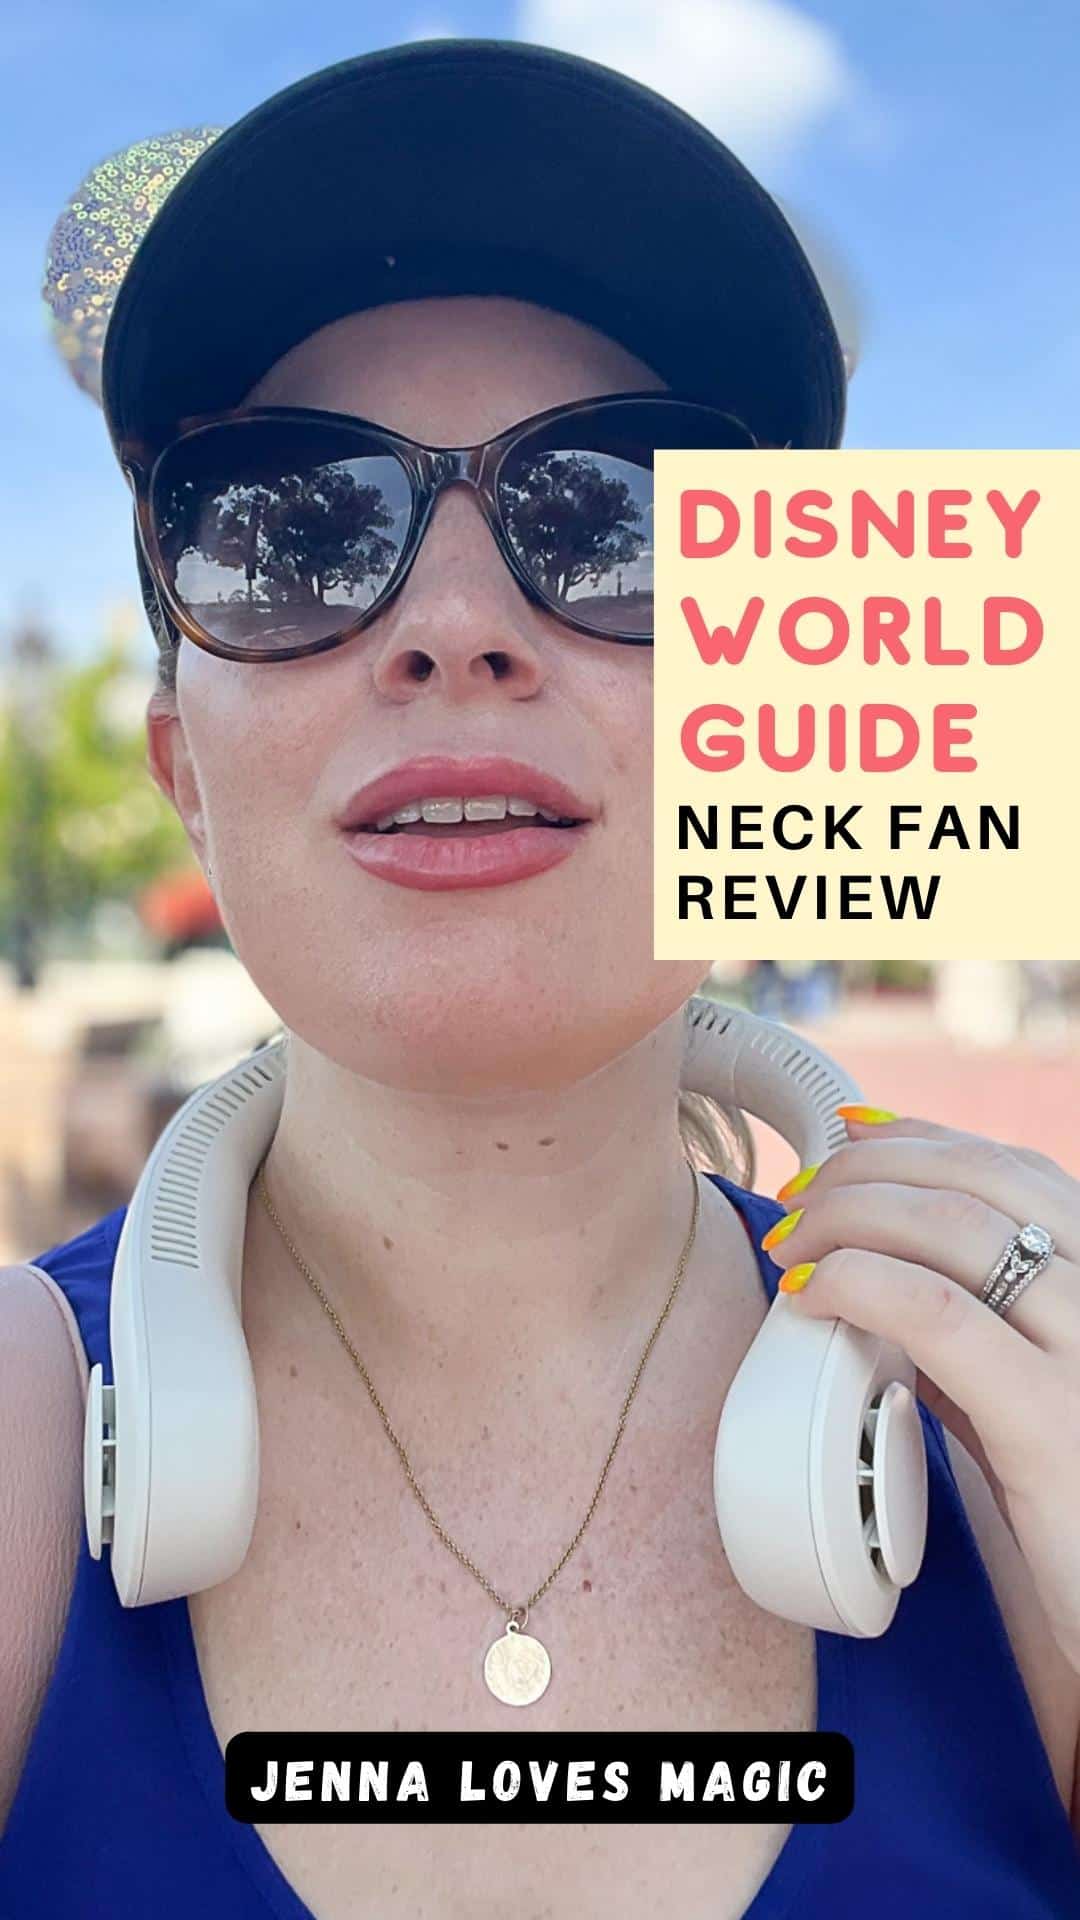 Disney World Neck fan review Amazon product for Disney Travel with Jenna Passaro and Jenna Loves Magic logo